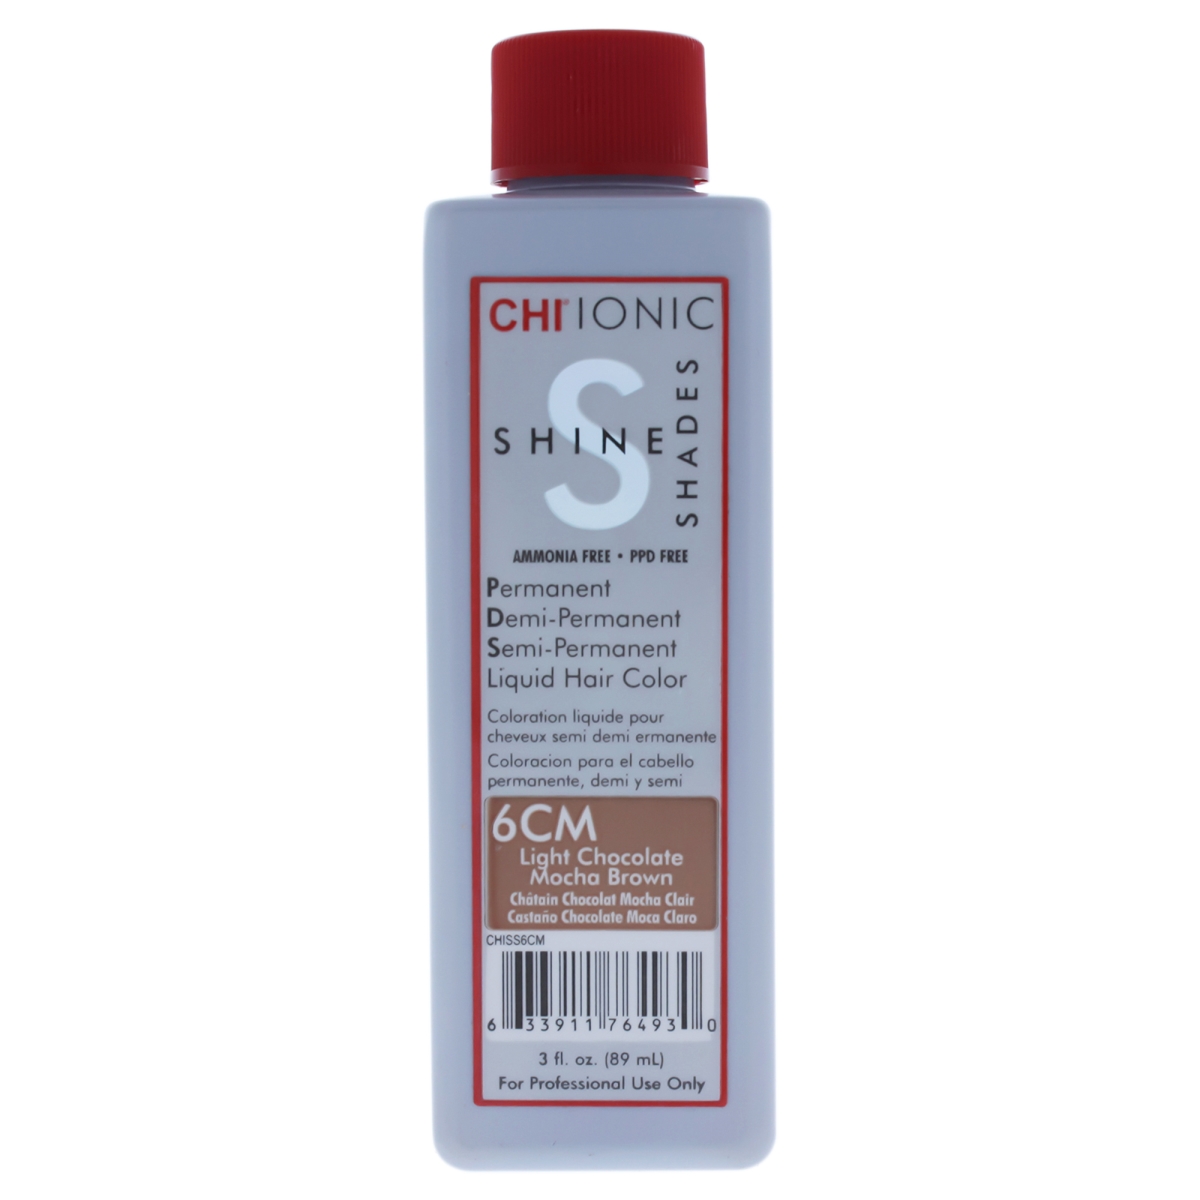 I0084032 Ionic Shine Shades Liquid Hair Color For Unisex - 6cm Light Chocolate Mocha Brown - 3 Oz